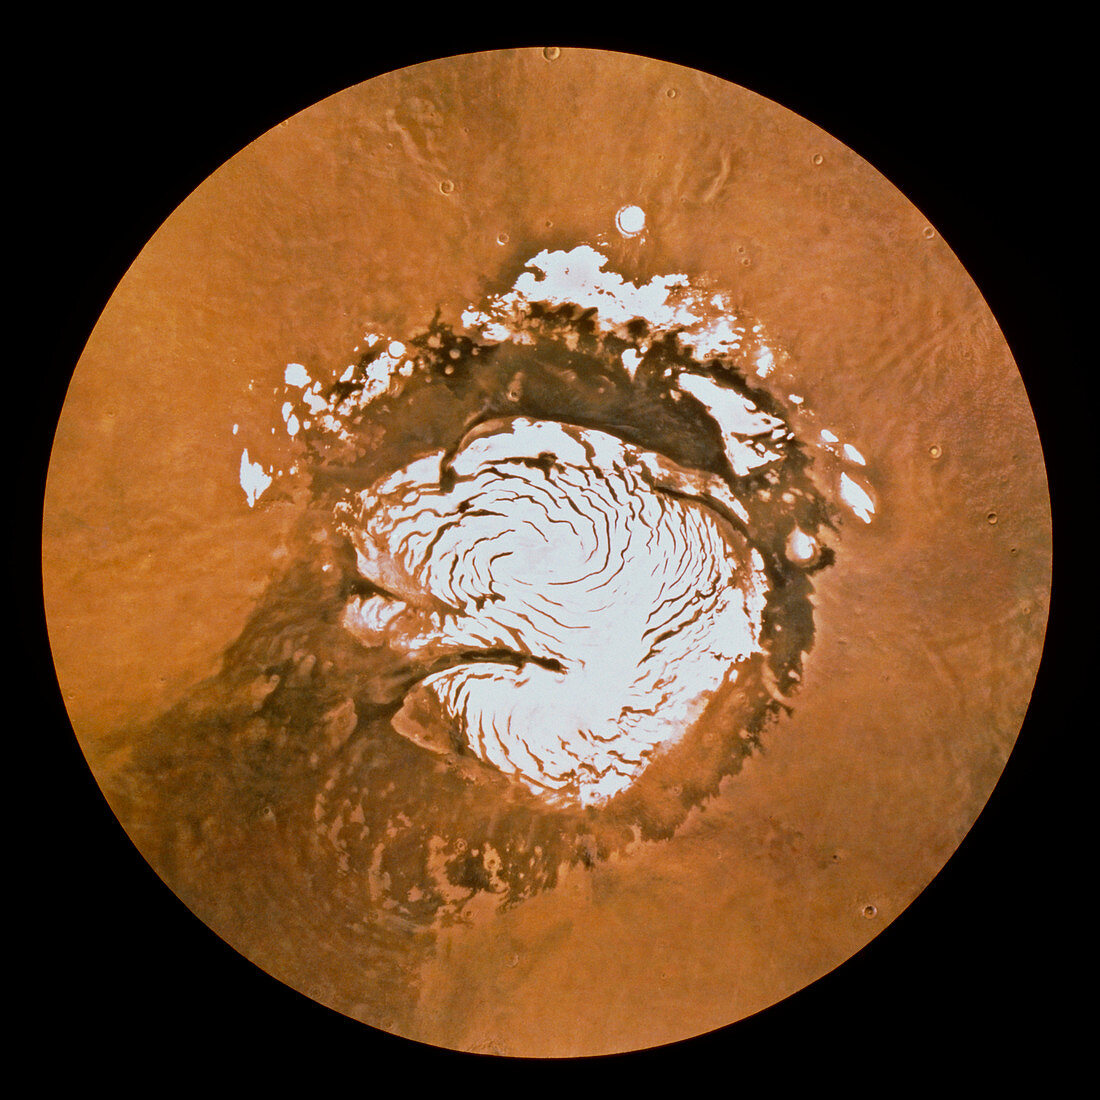 Mosaic of images of Mars north polar cap